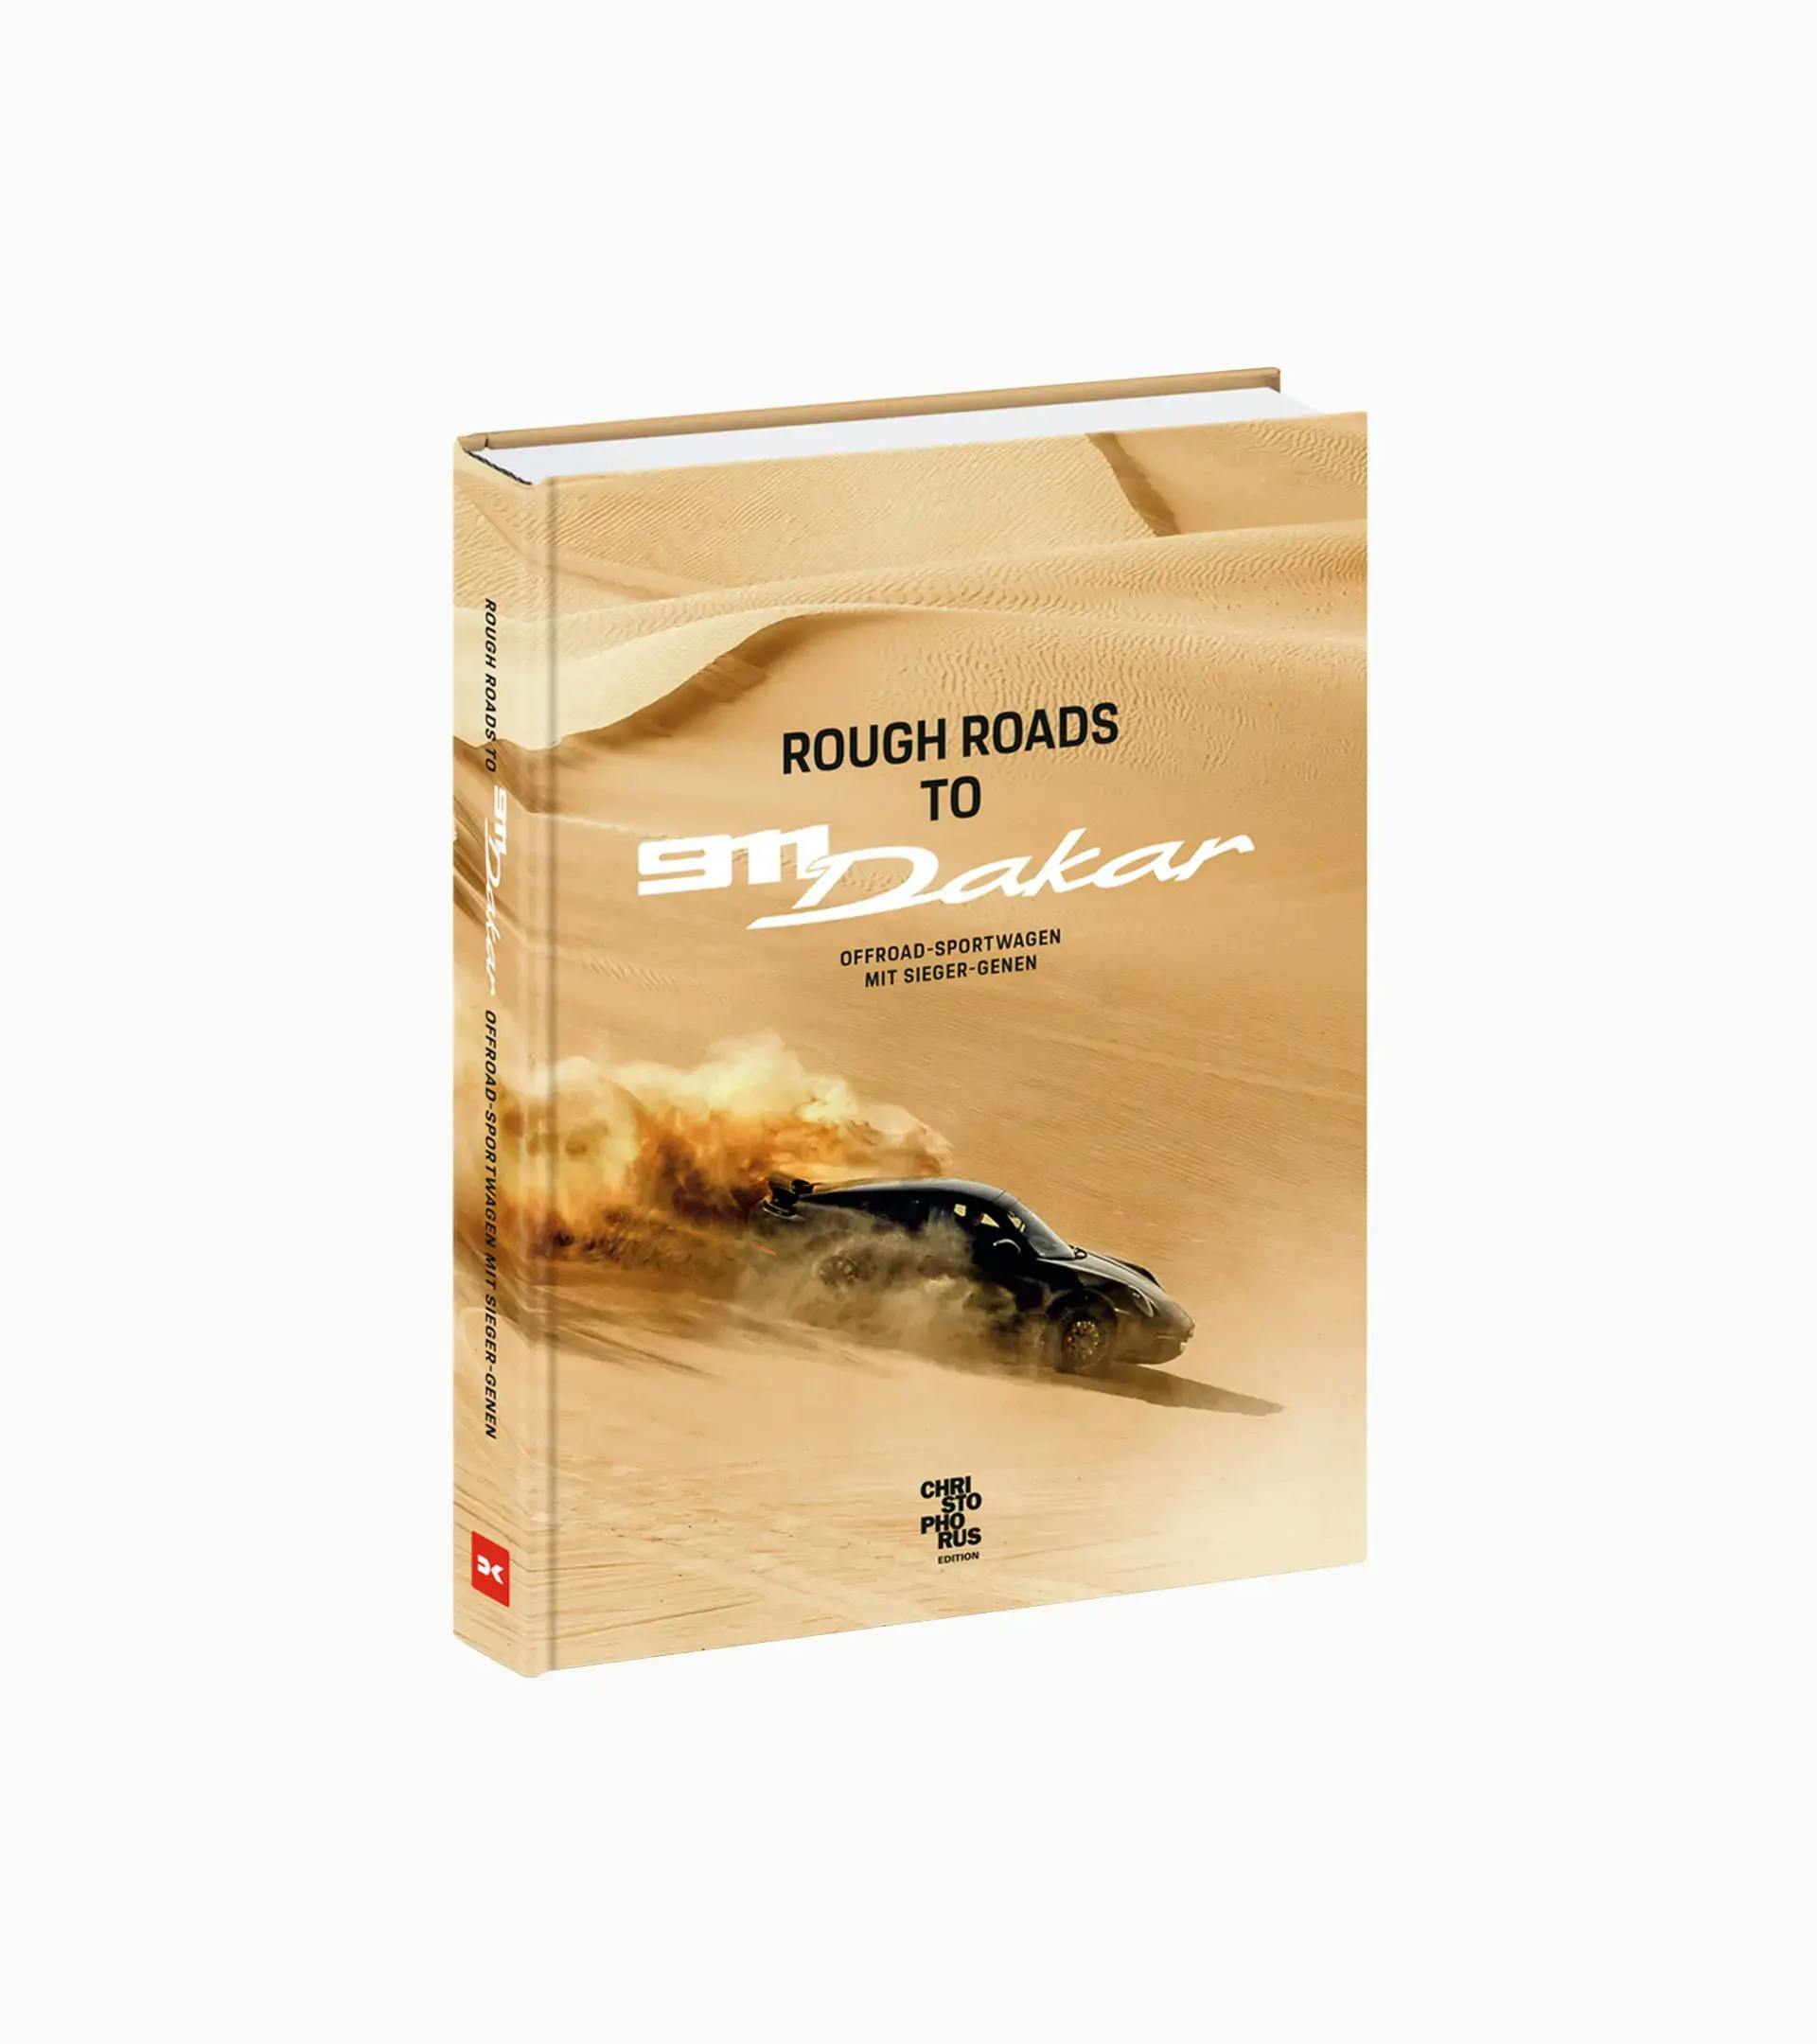 Buch Rough Roads to 911 Dakar  1